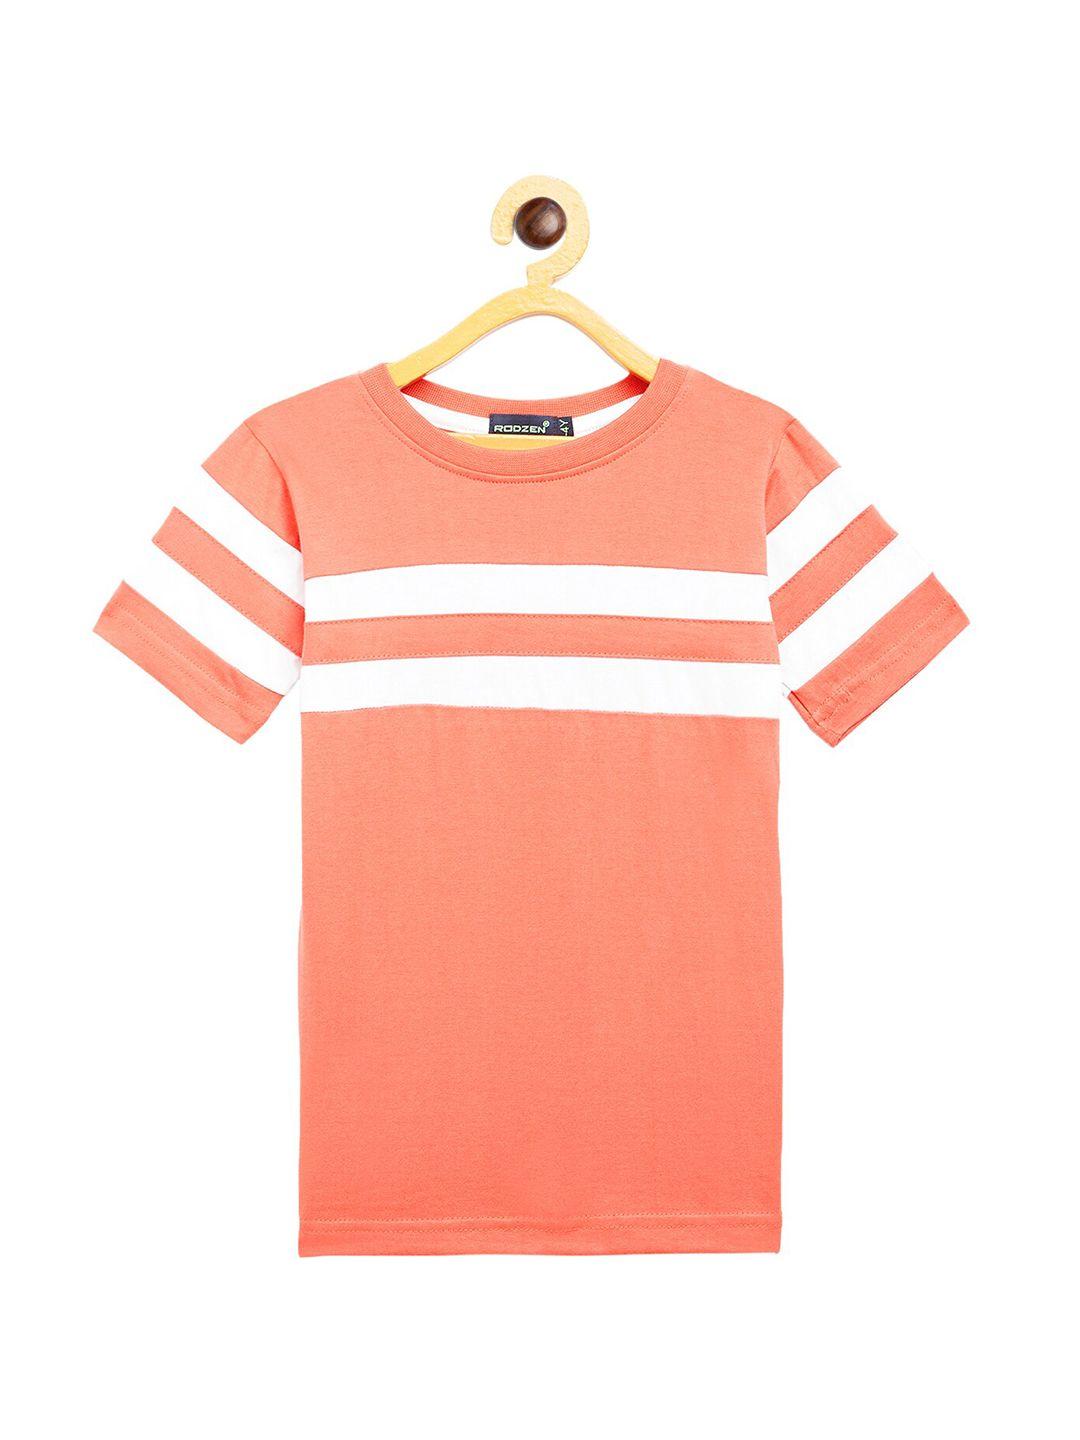 rodzen boys orange & white striped t-shirt